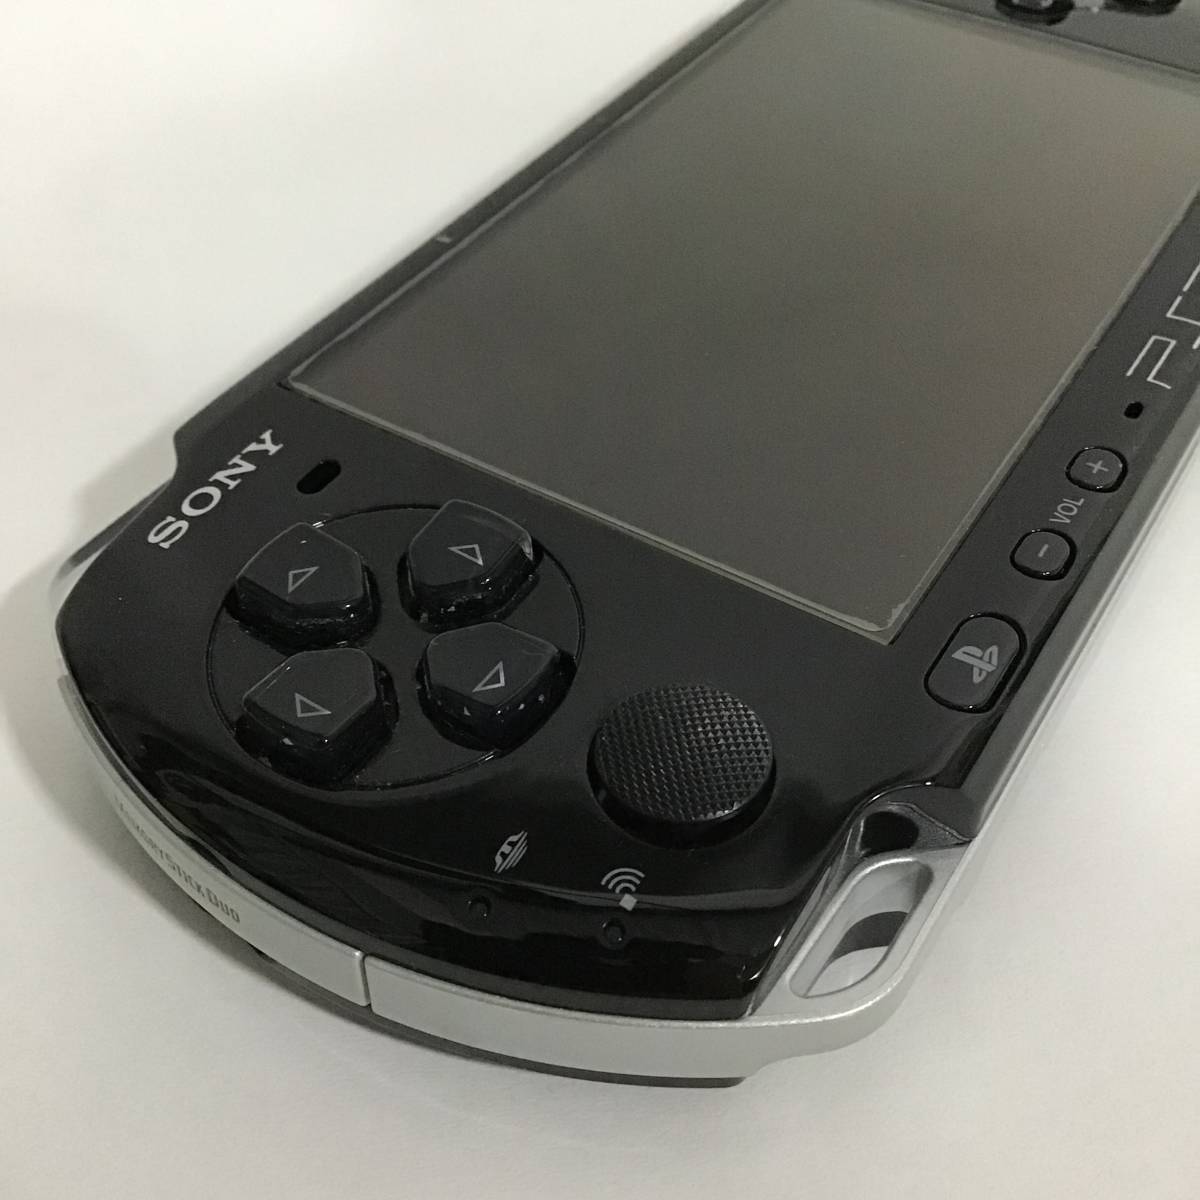 PSP-3000 ピアノブラック PSP本体 ソフト2本付き まとめ売り 中古 匿名配送 アサシンクリードブラッドライン 英雄伝説 零の軌跡